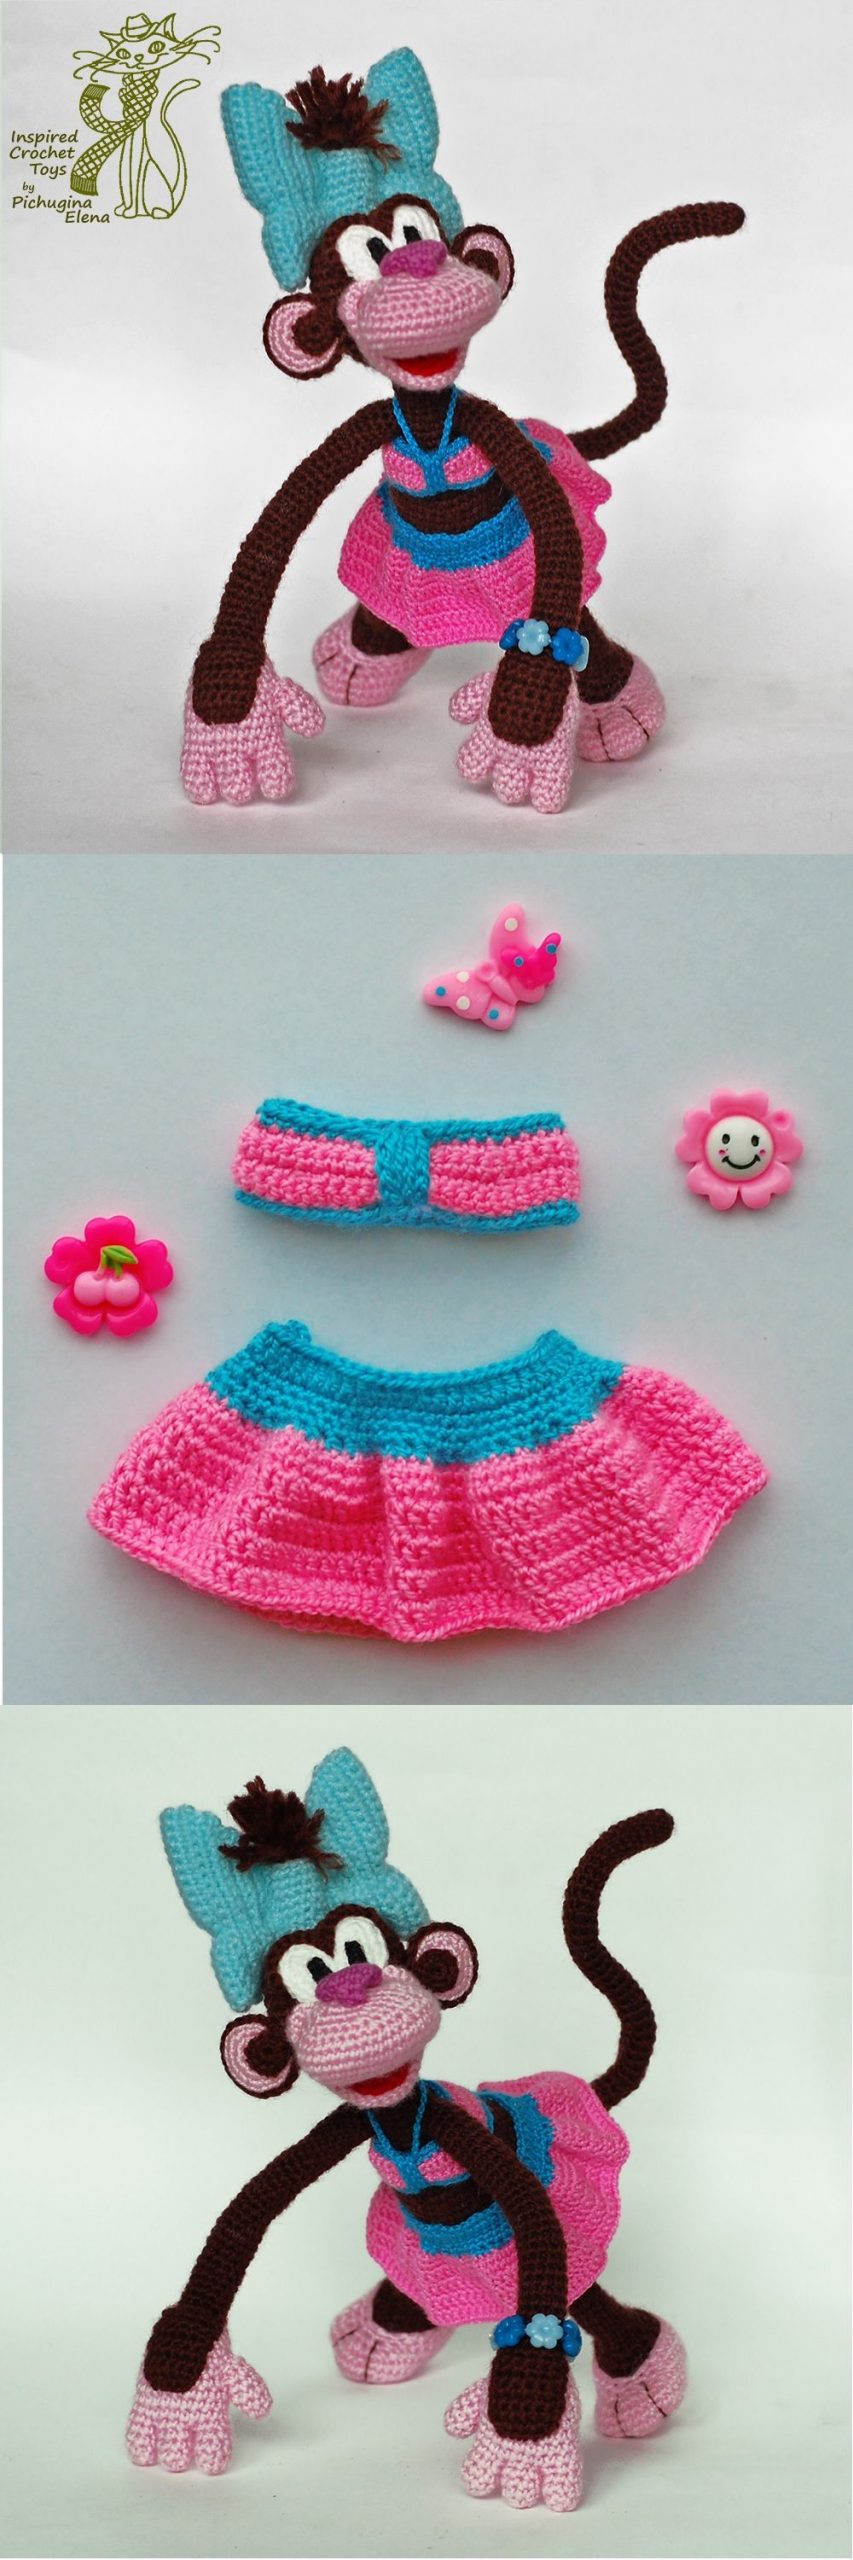 055-Amigurumi-Pattern.-Crochet-Monkey-Boy-Amigurumi-Monkey-Girl.-Discount.jpg